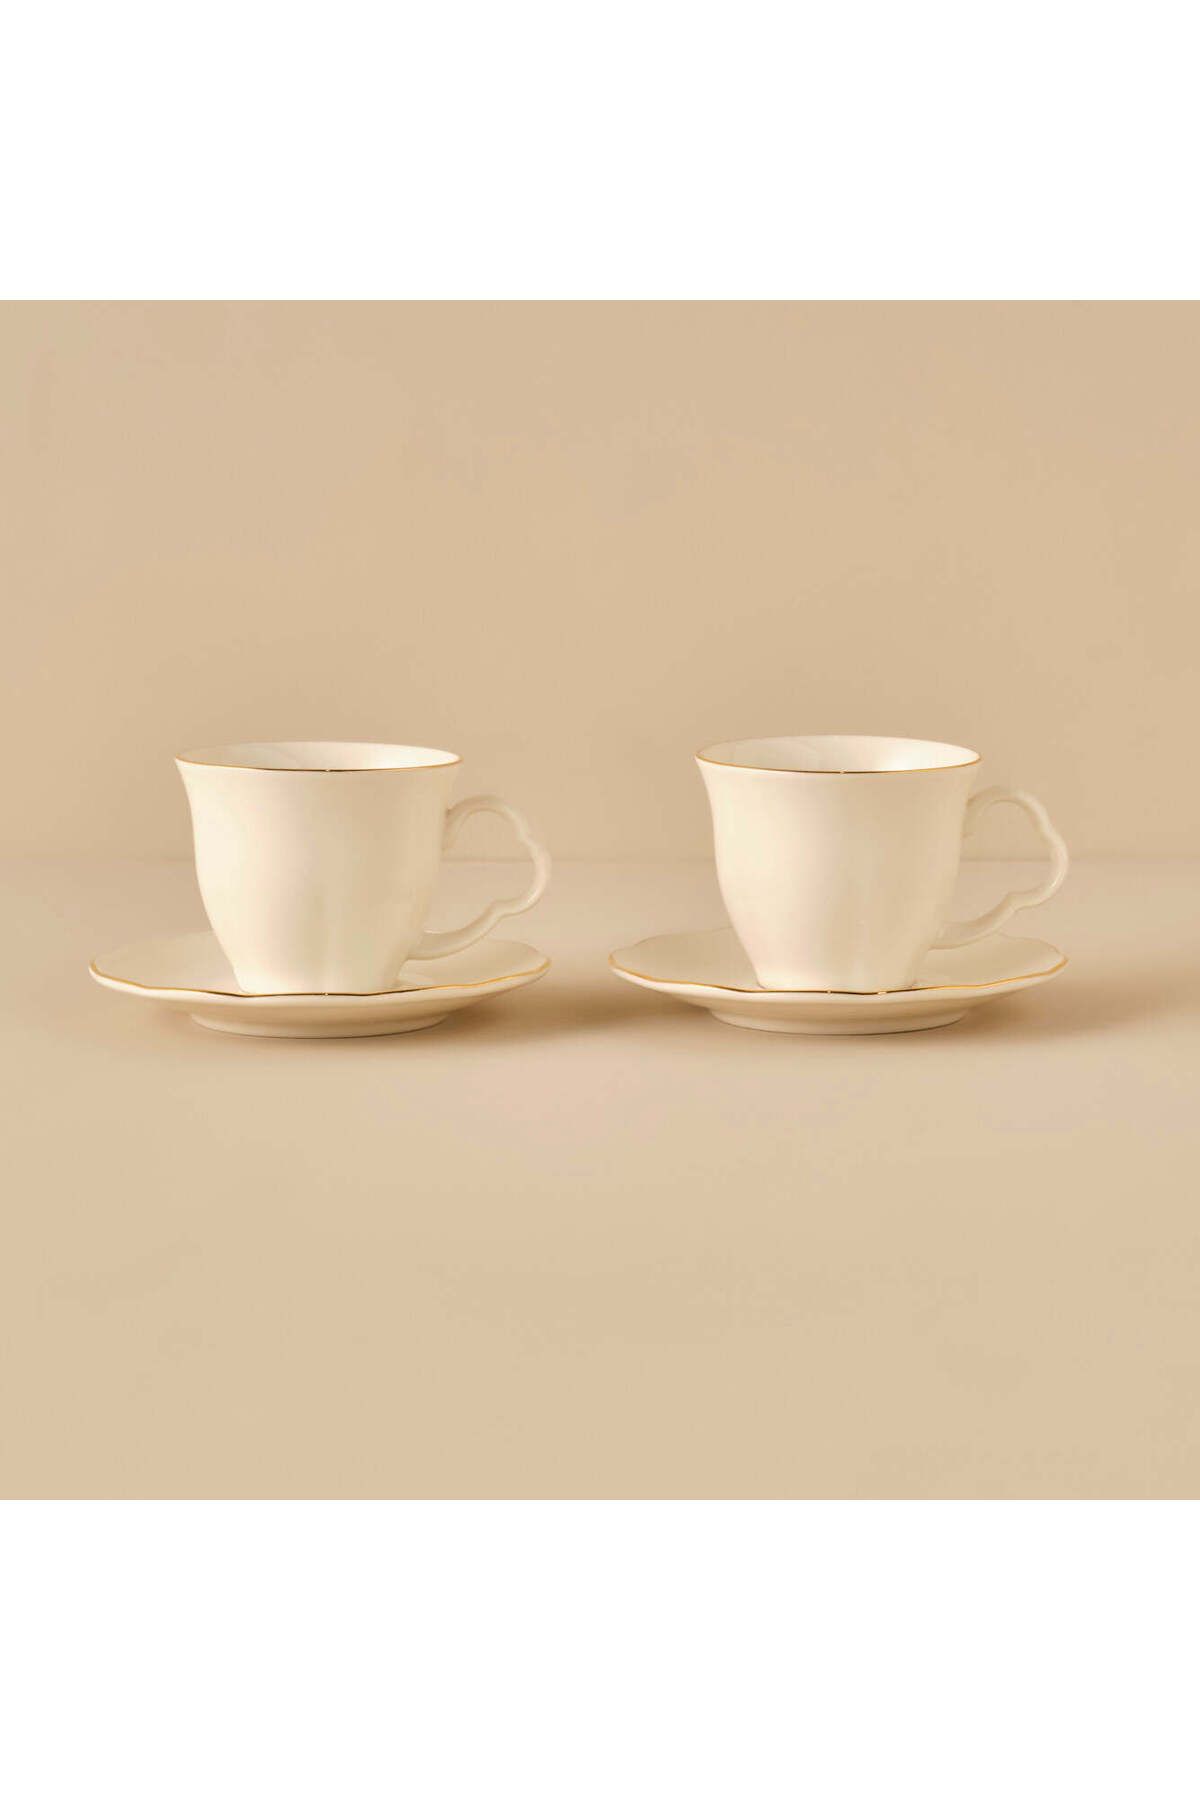 Bella Maison Clover Porselen 2'li Çay Fincanı Seti Gold  (280 cc)